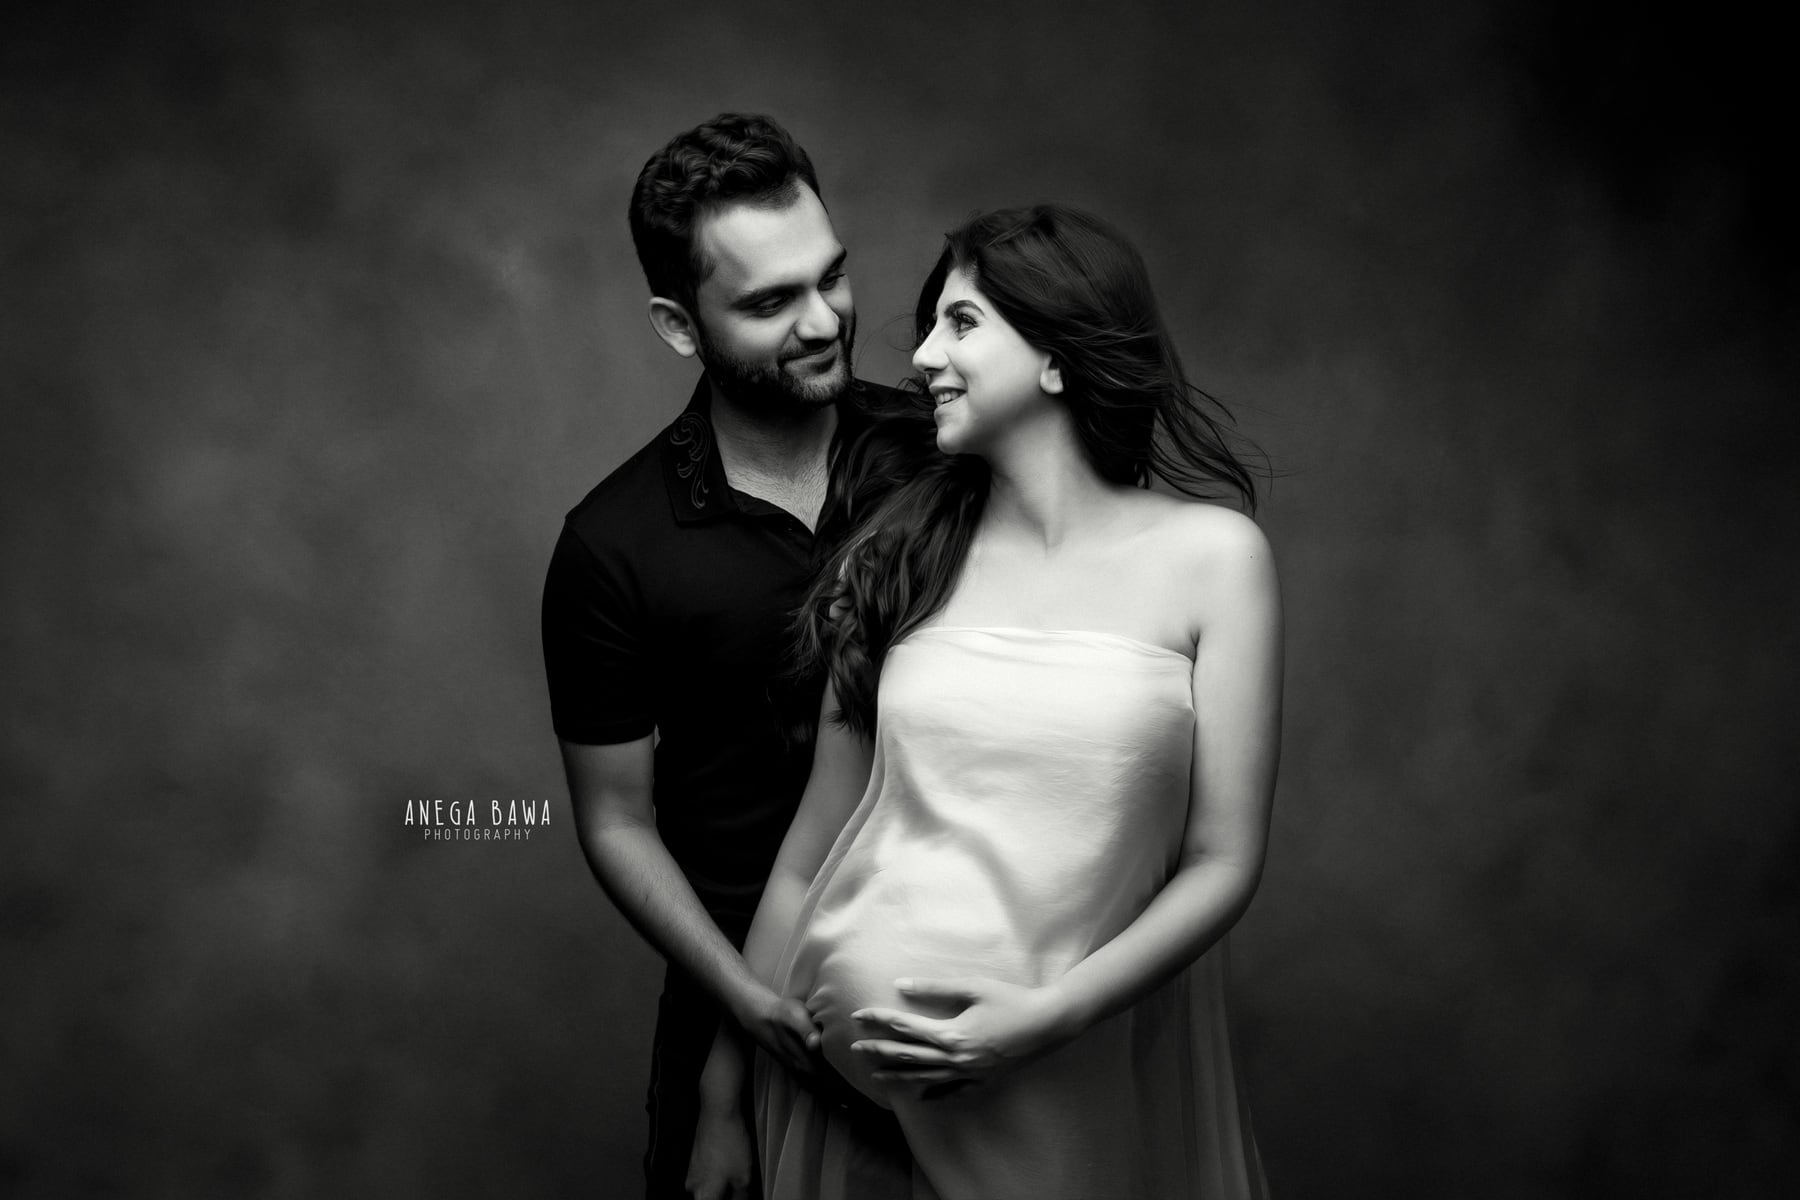 Couples pregnancy poses - Milk bath maternity photos NYC NJ Artistic  newborn baby photographer